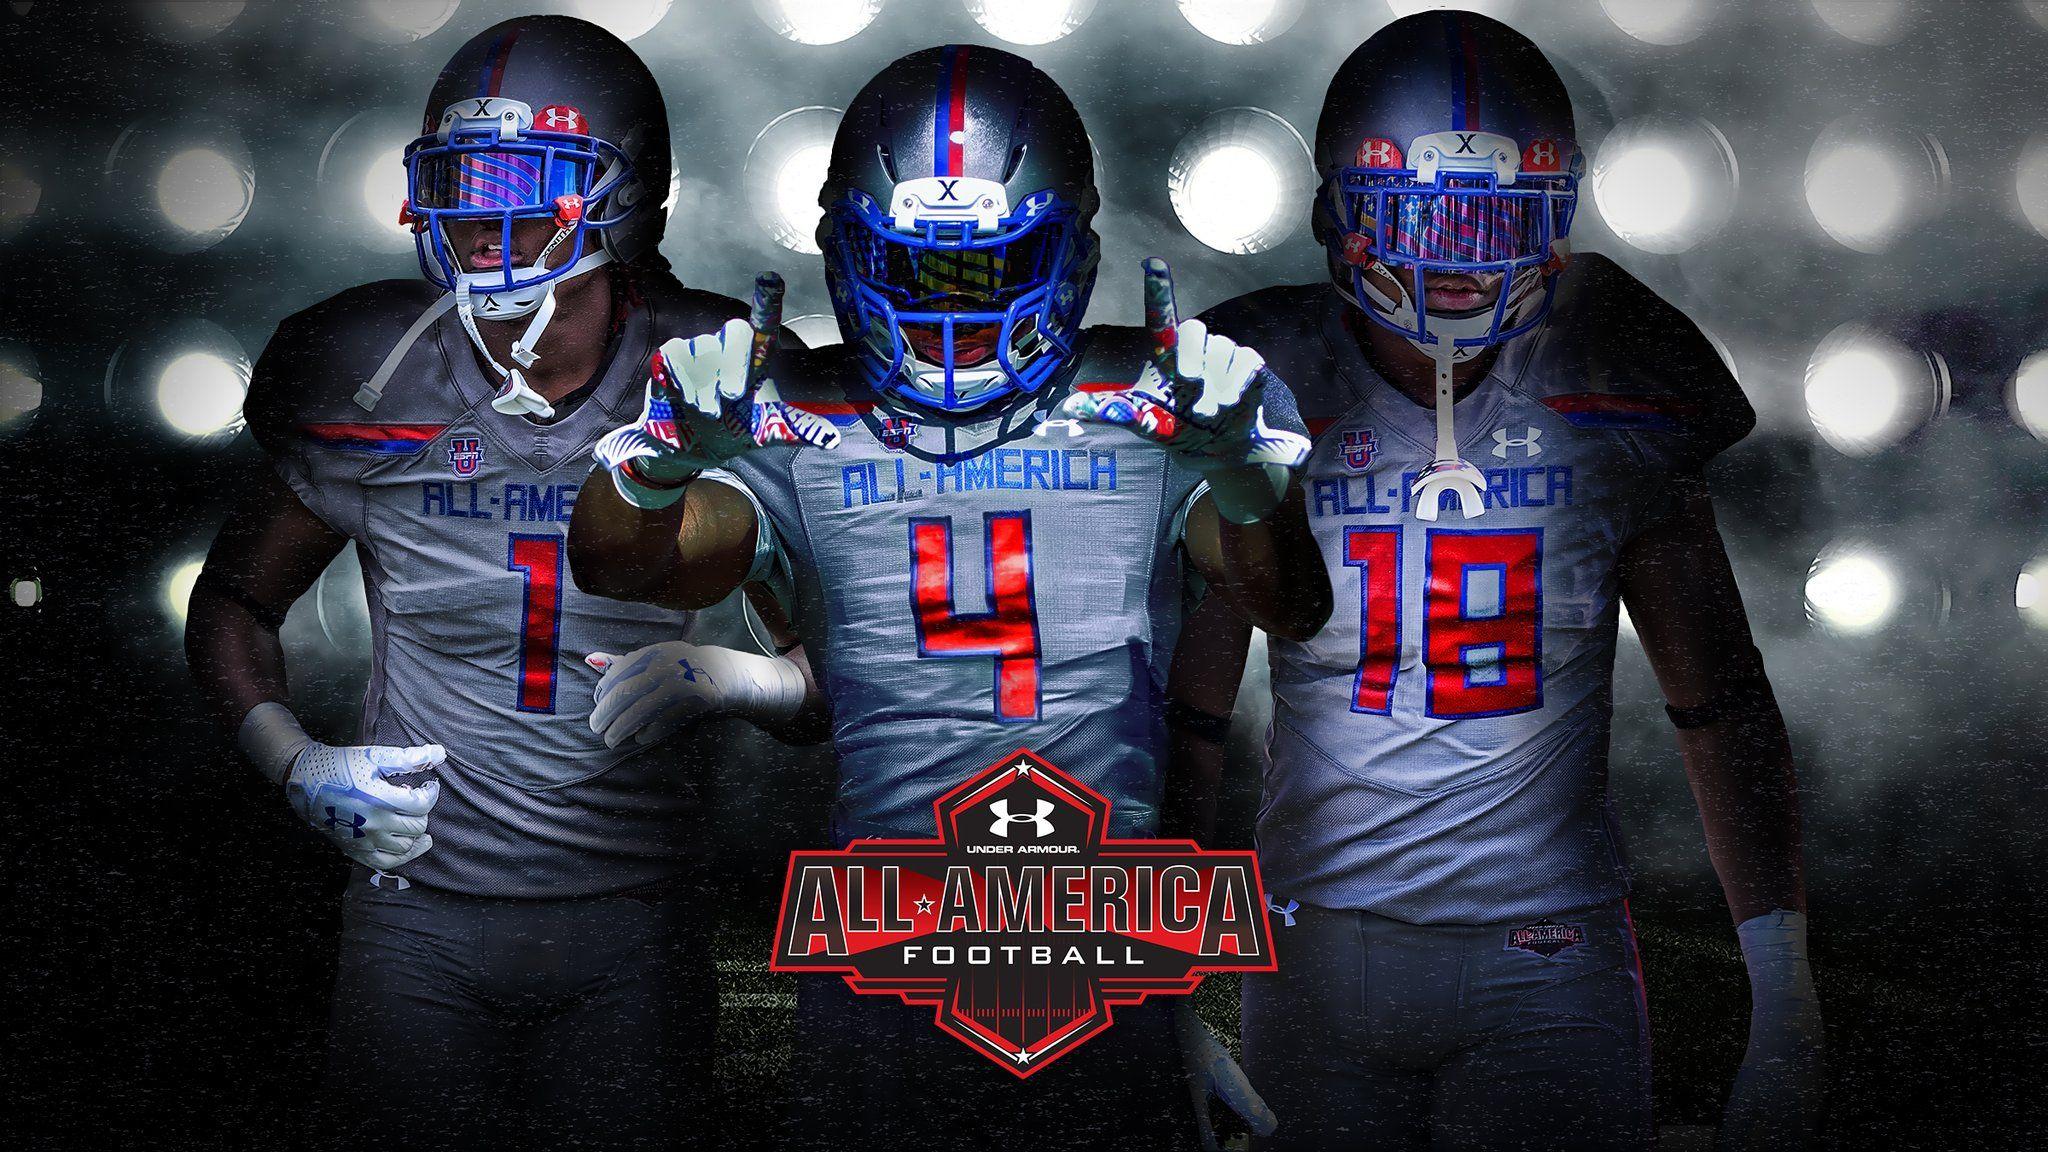 Under Armour Team Football Logo - Under Armour and U.S. ARMY All America Football Team VR Experience